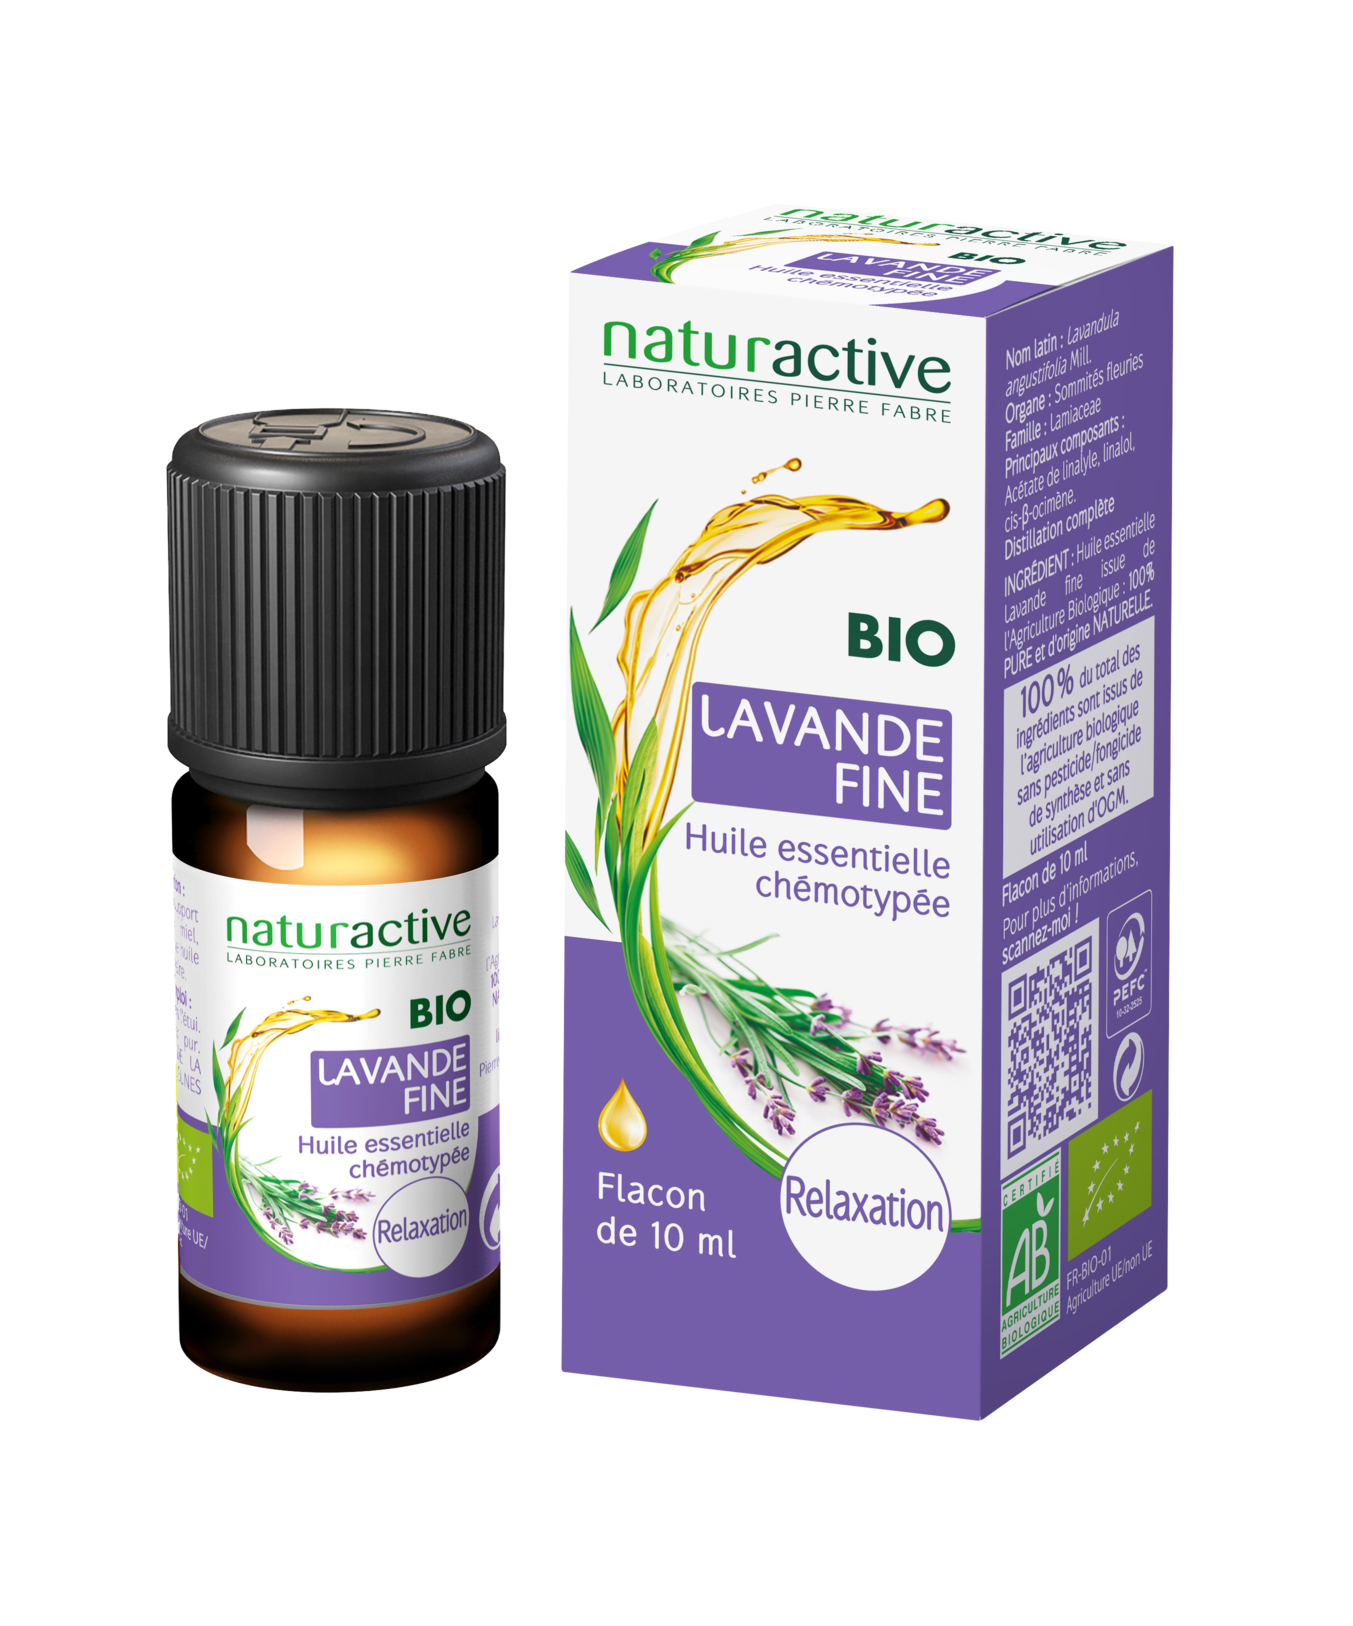 Naturactive : Huile essentielle de Lavande fine BIO, flacon de 10 ml